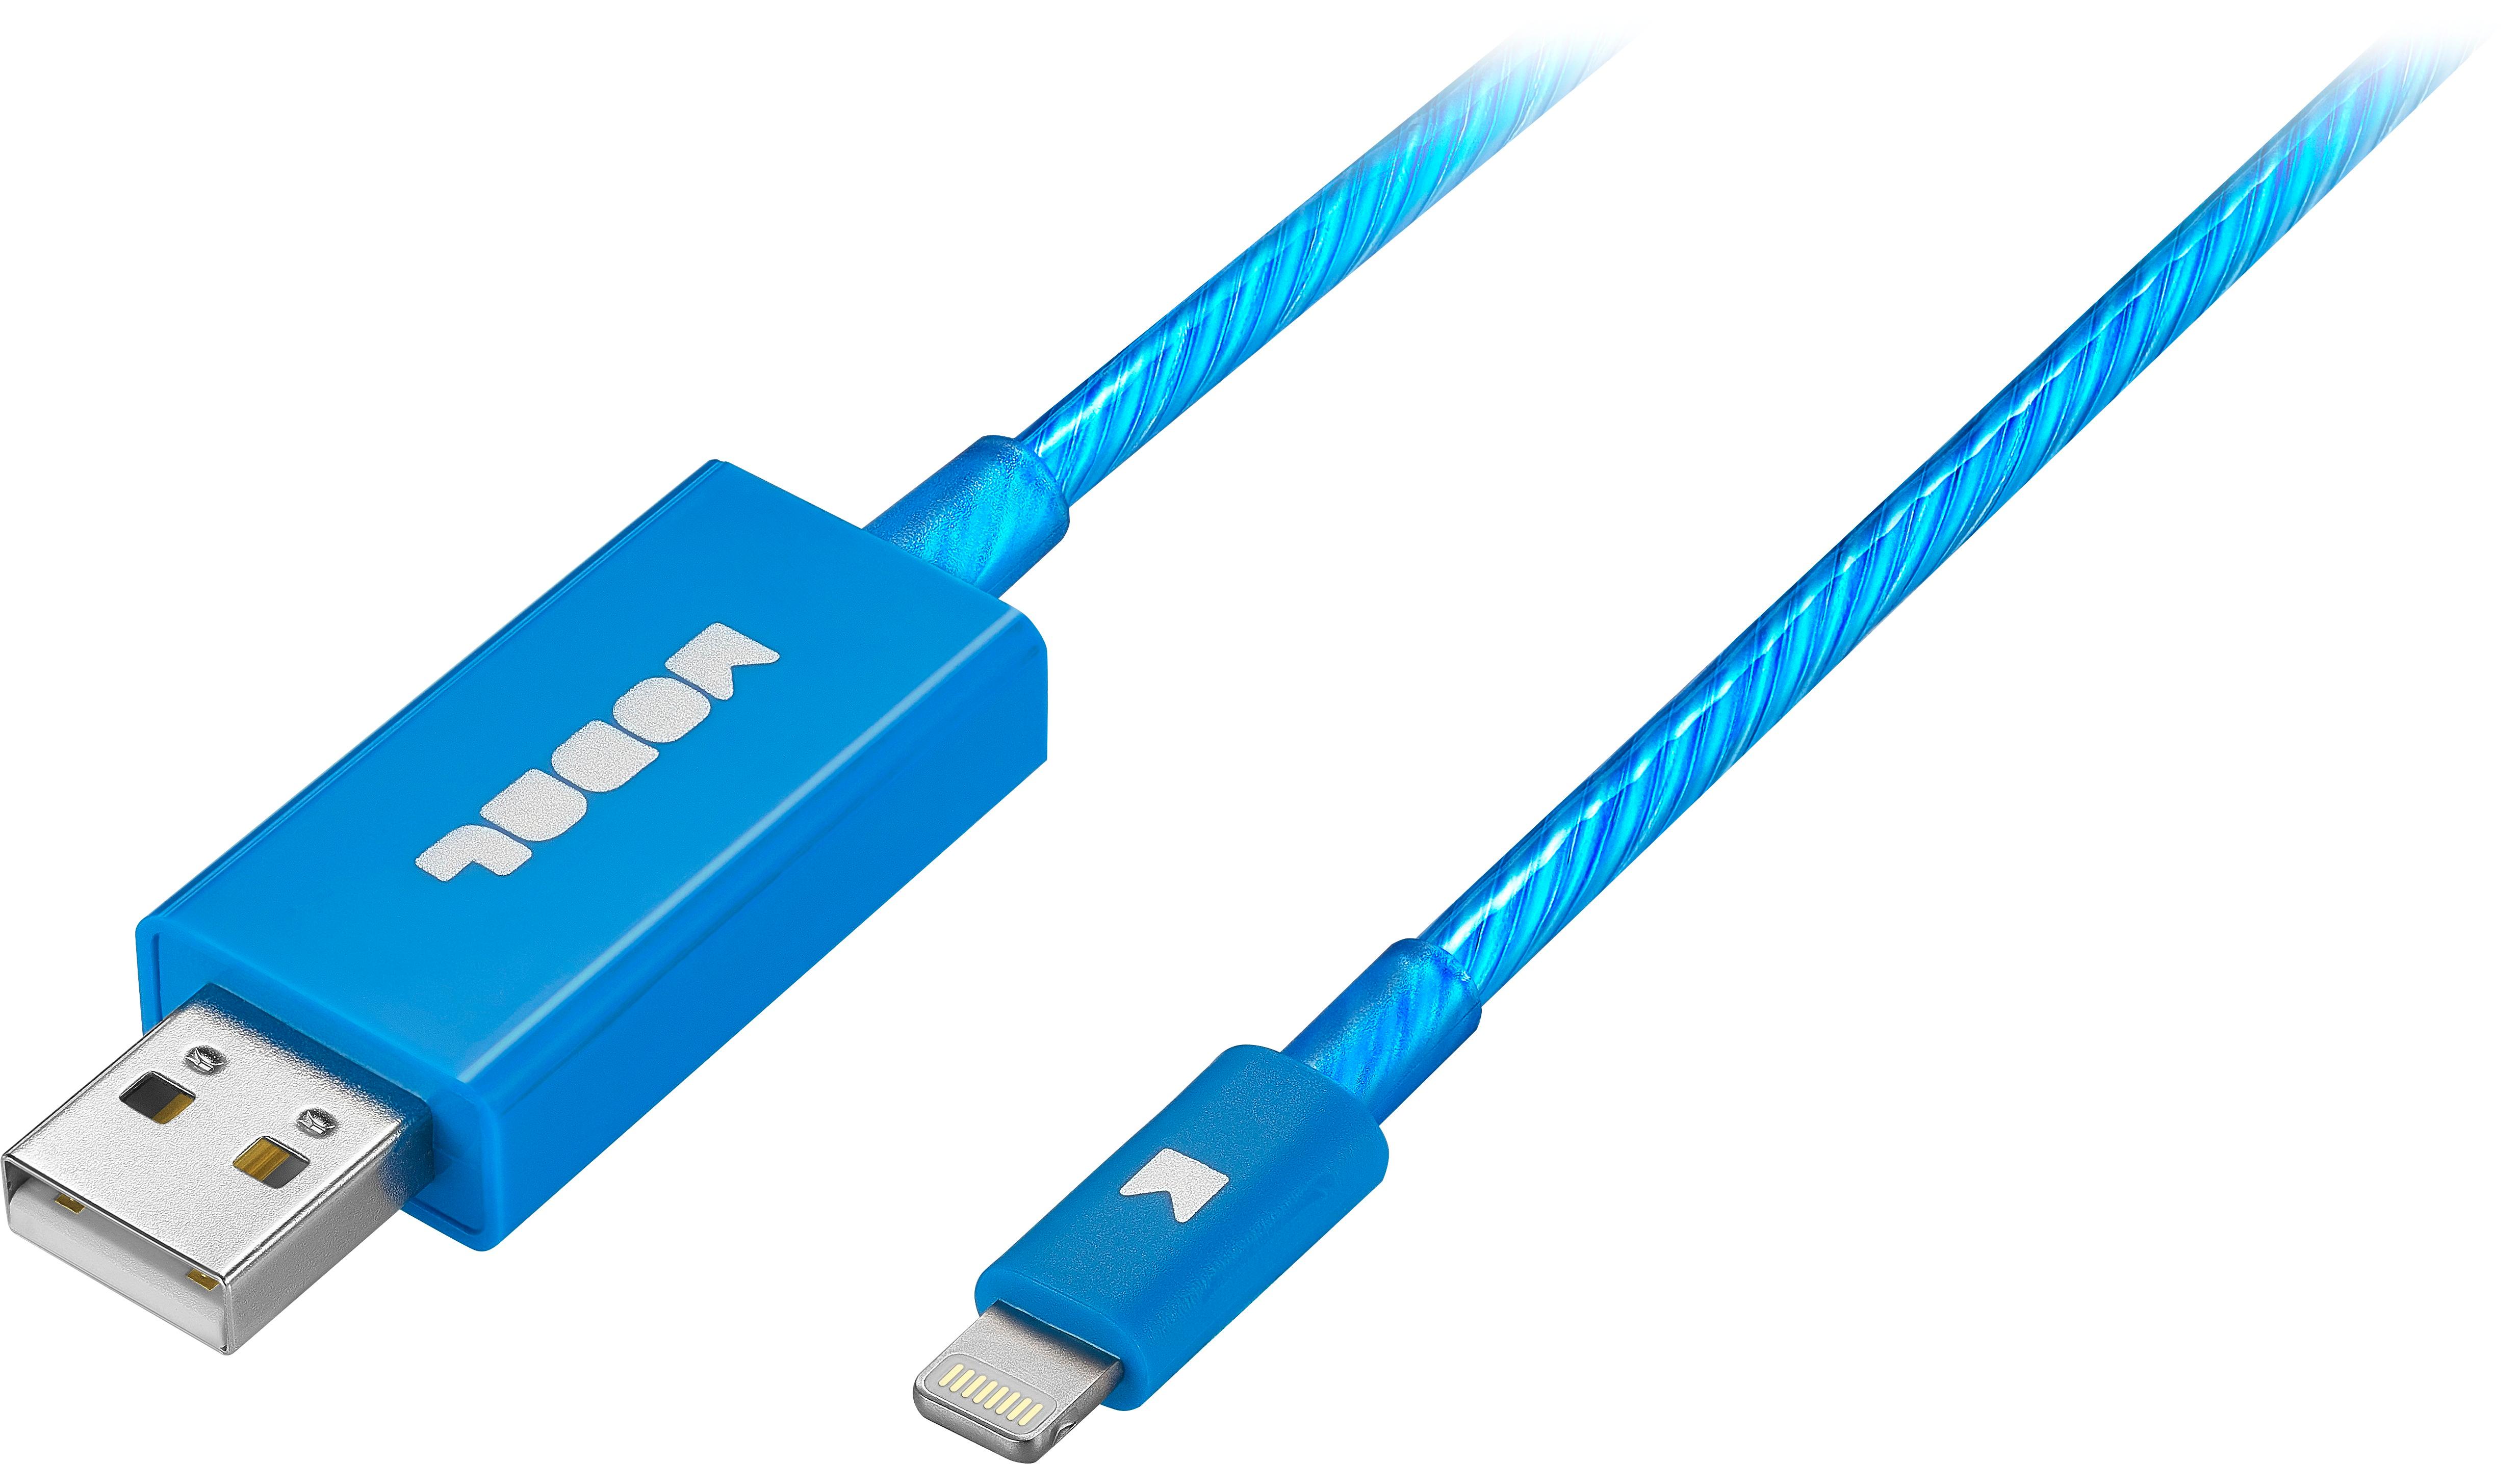 Câble Lightning ADEQWAT vers USB 3m renforcé certifié Apple